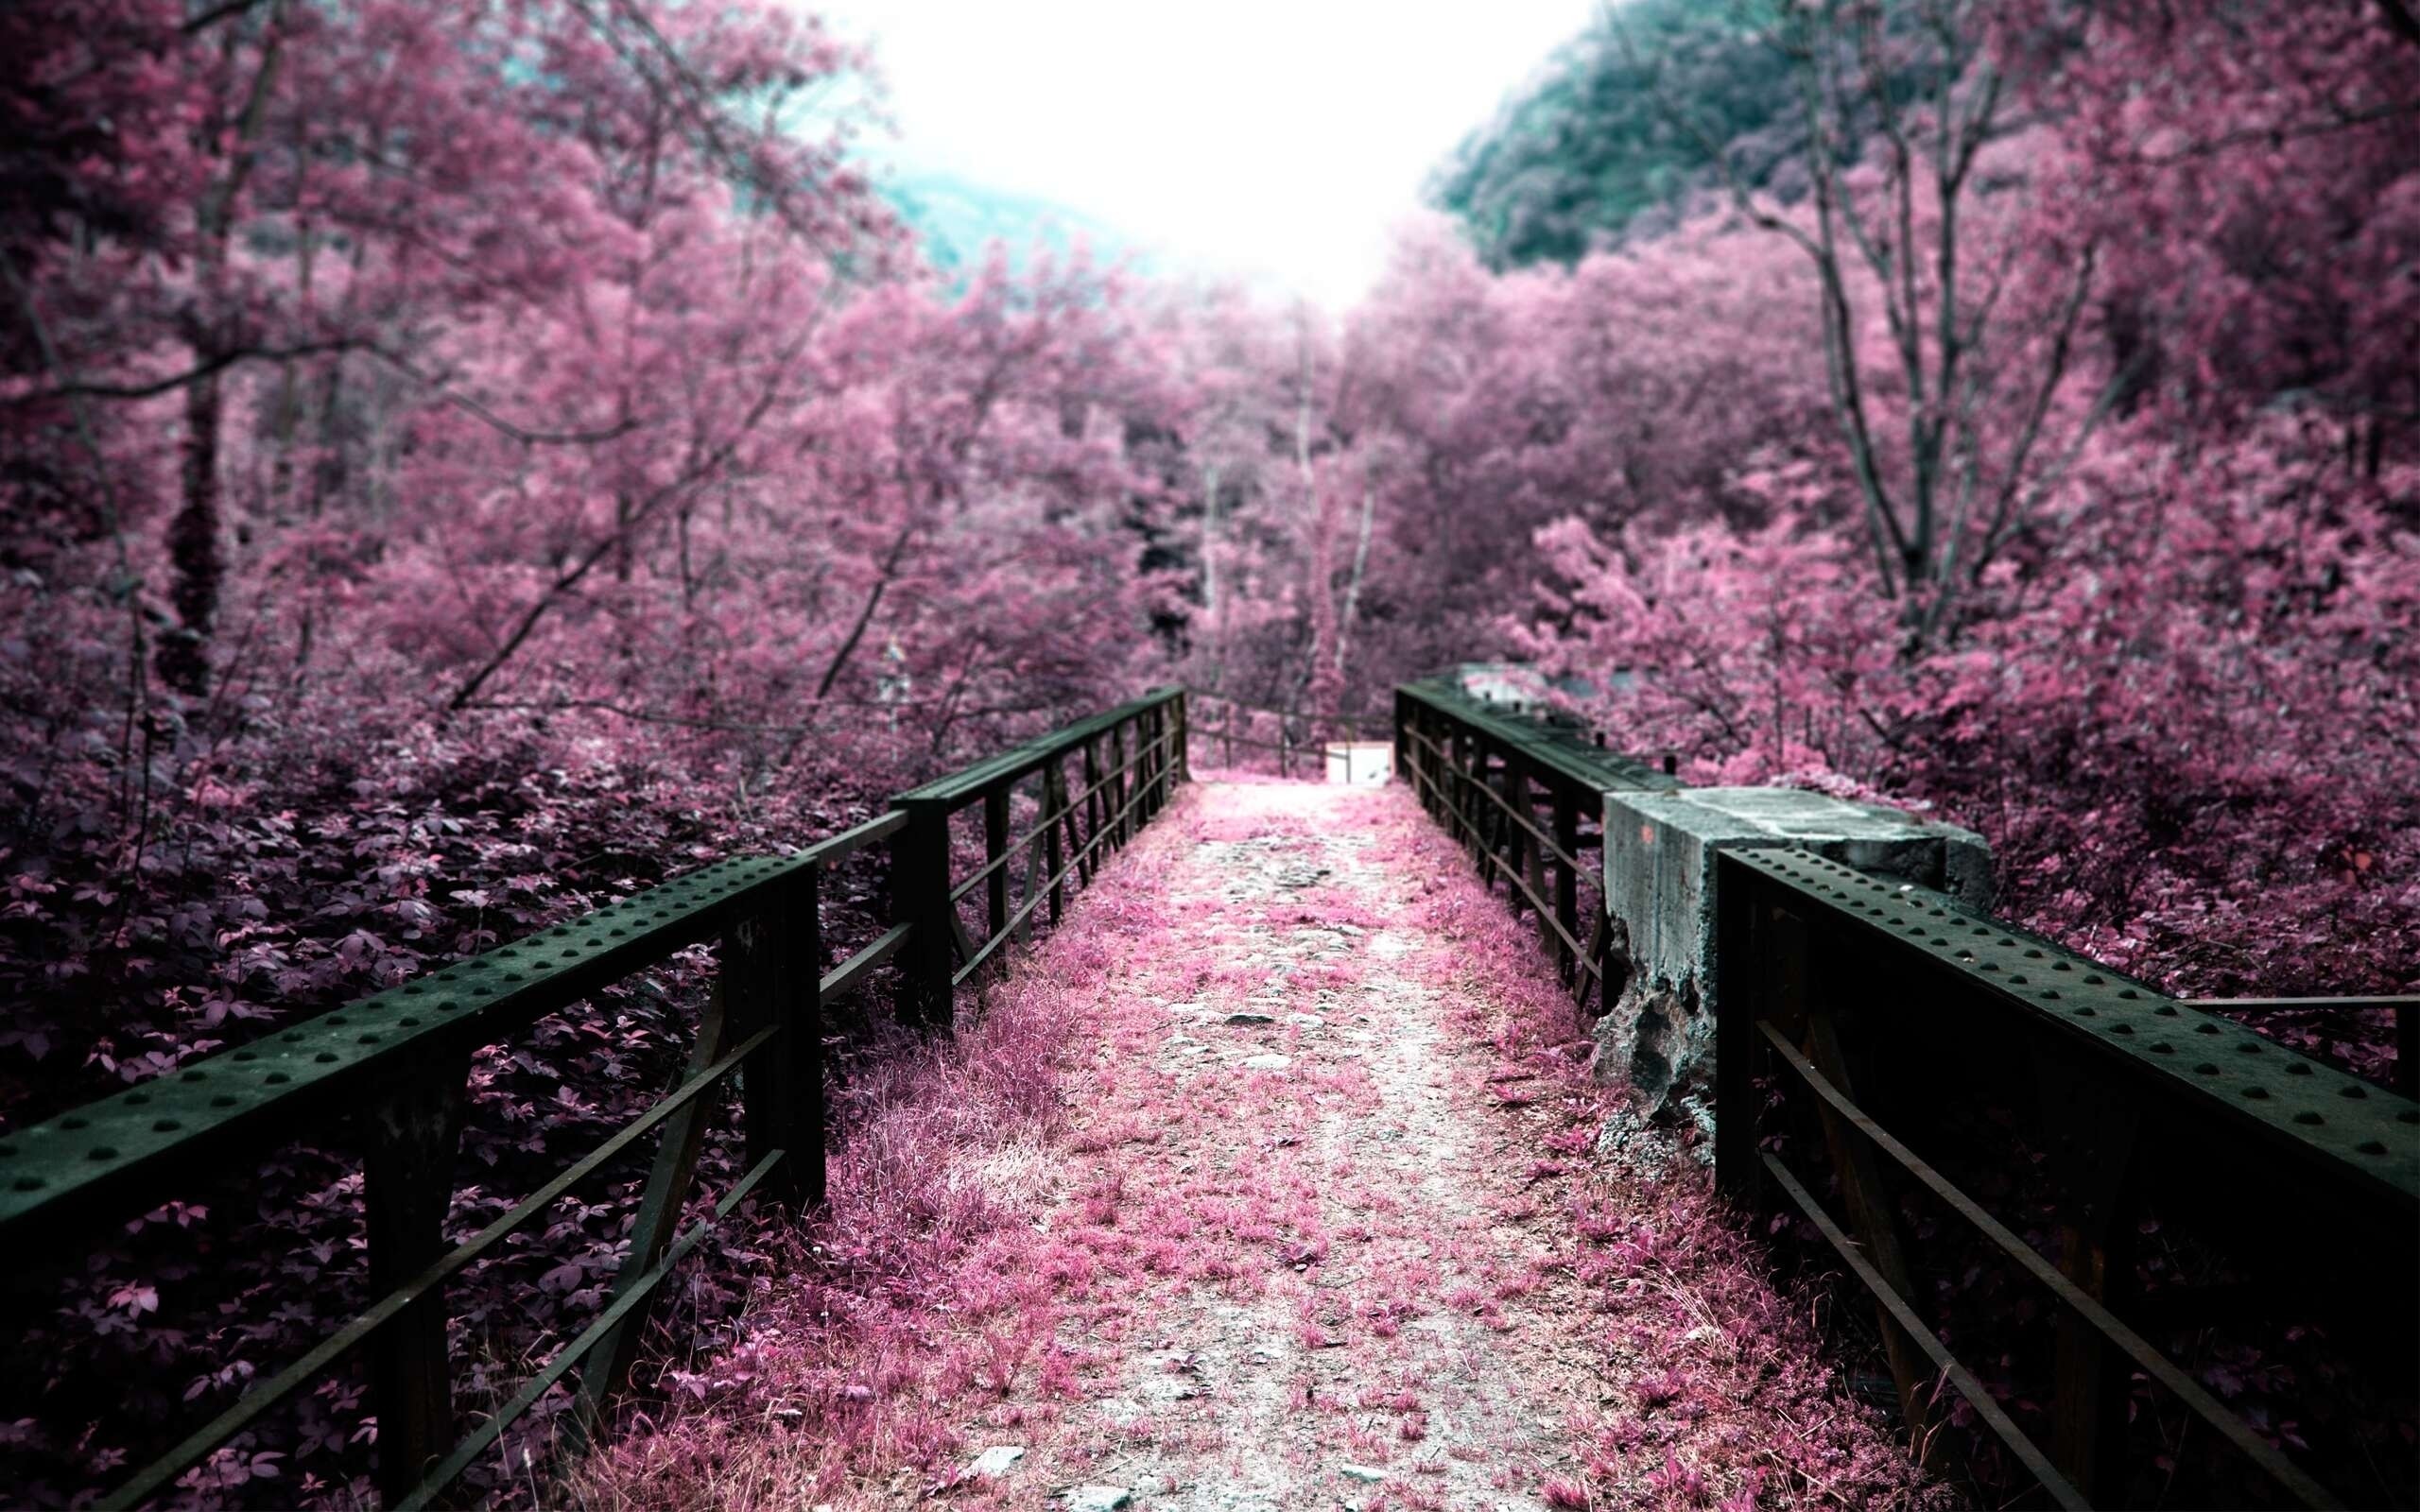 General 2560x1600 pink bridge nature cherry blossom path landscape infrared